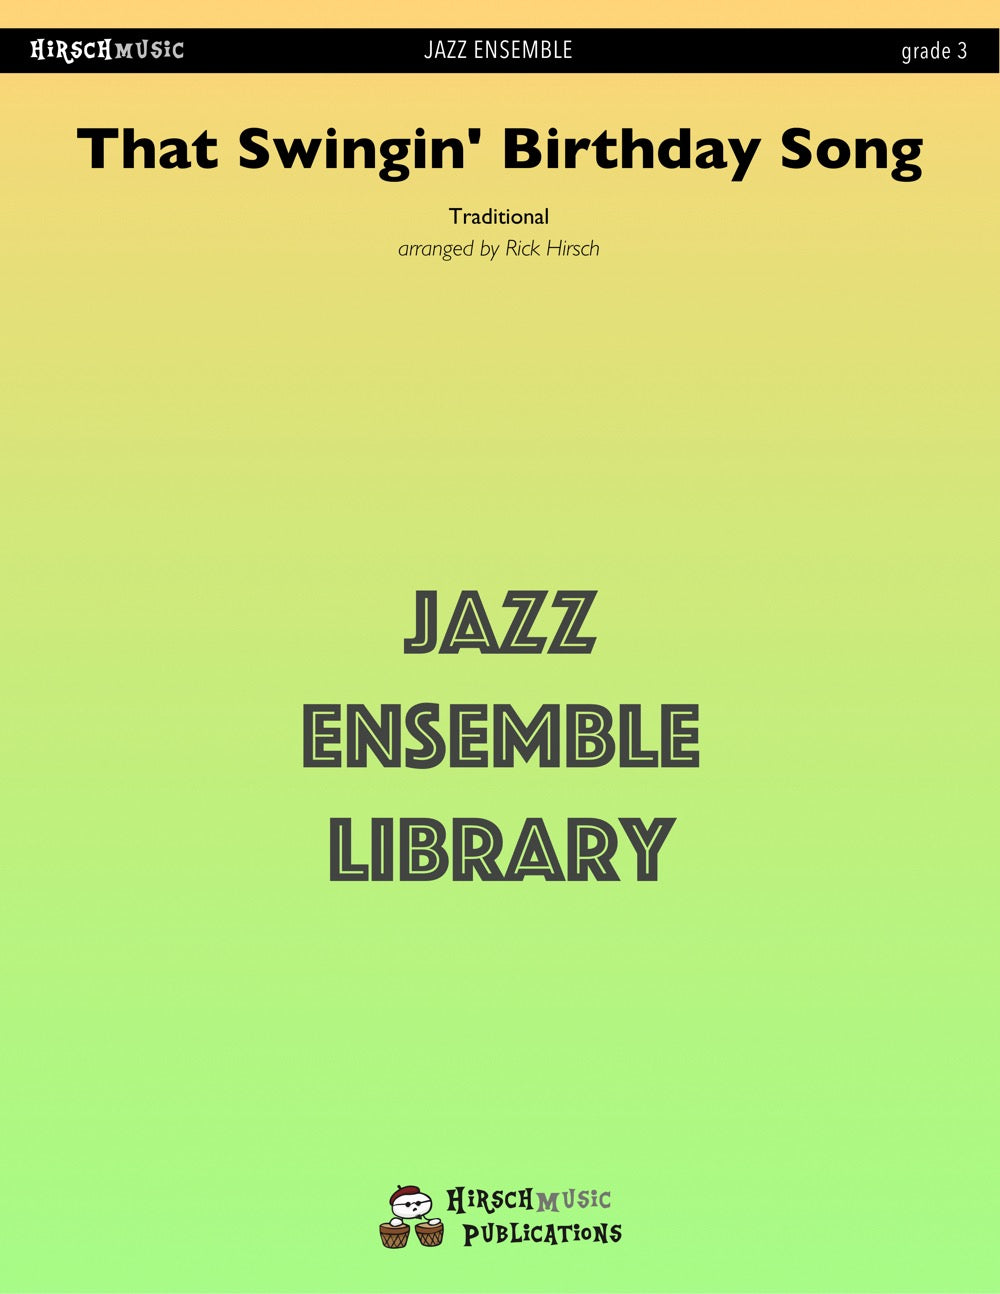 That Swingin' Birthday Song